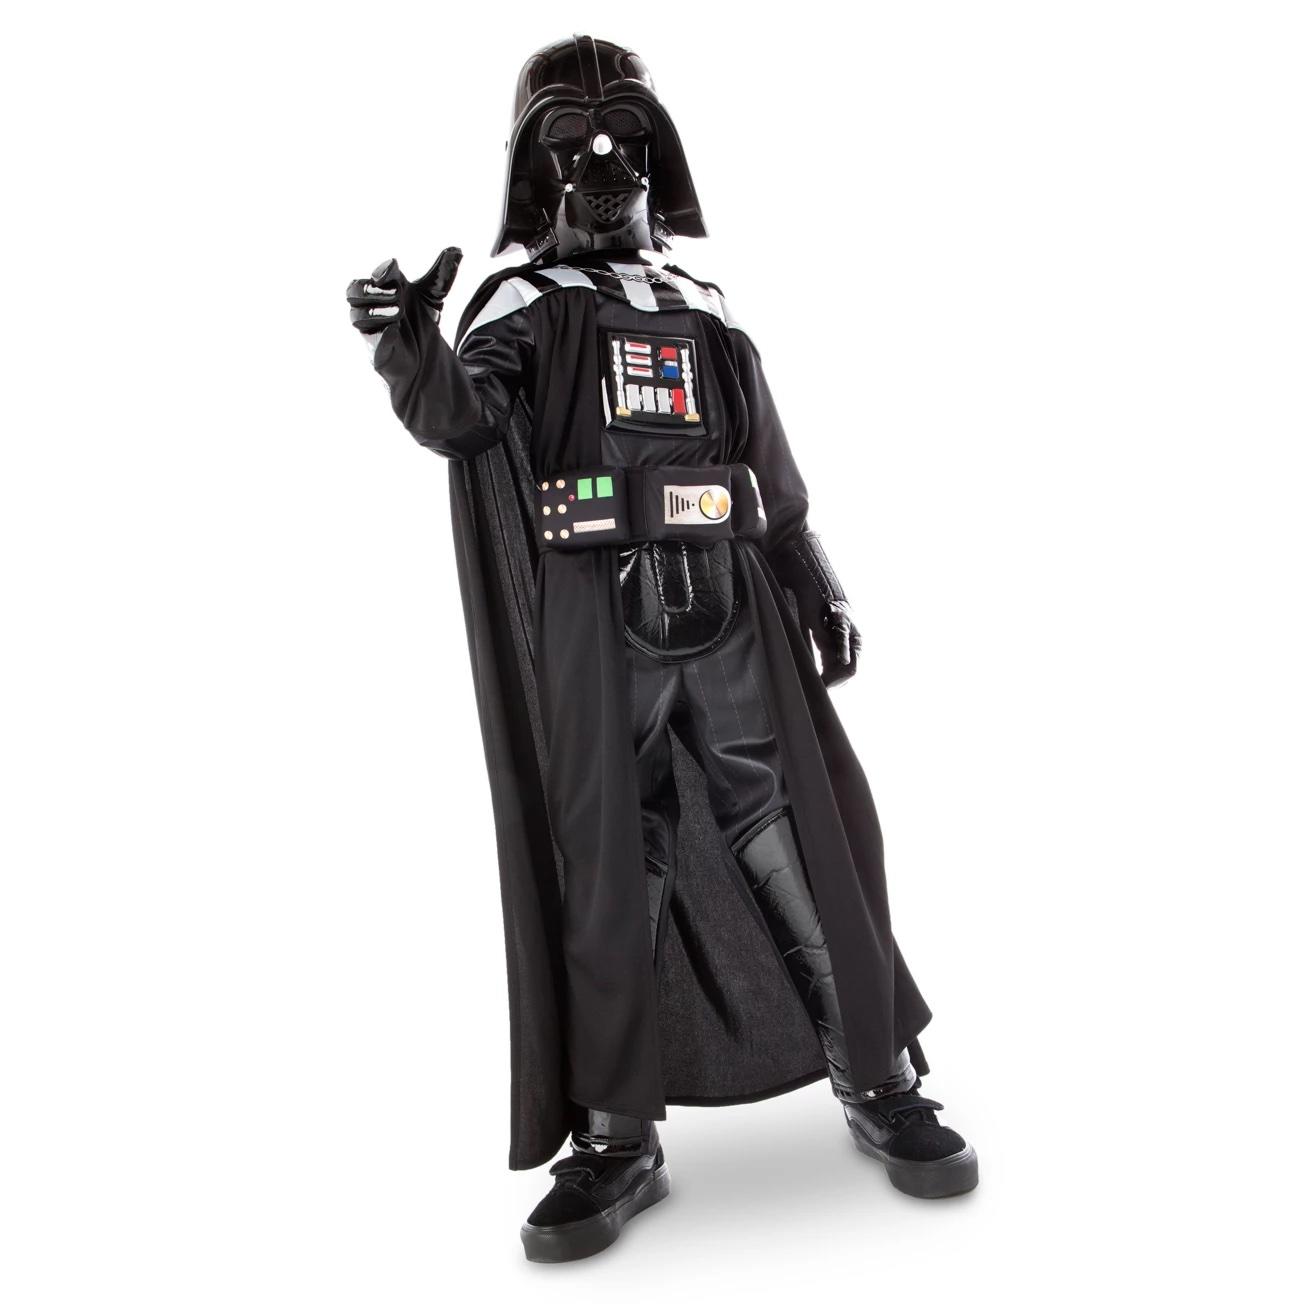 Darth Vader Halloween costume with sound